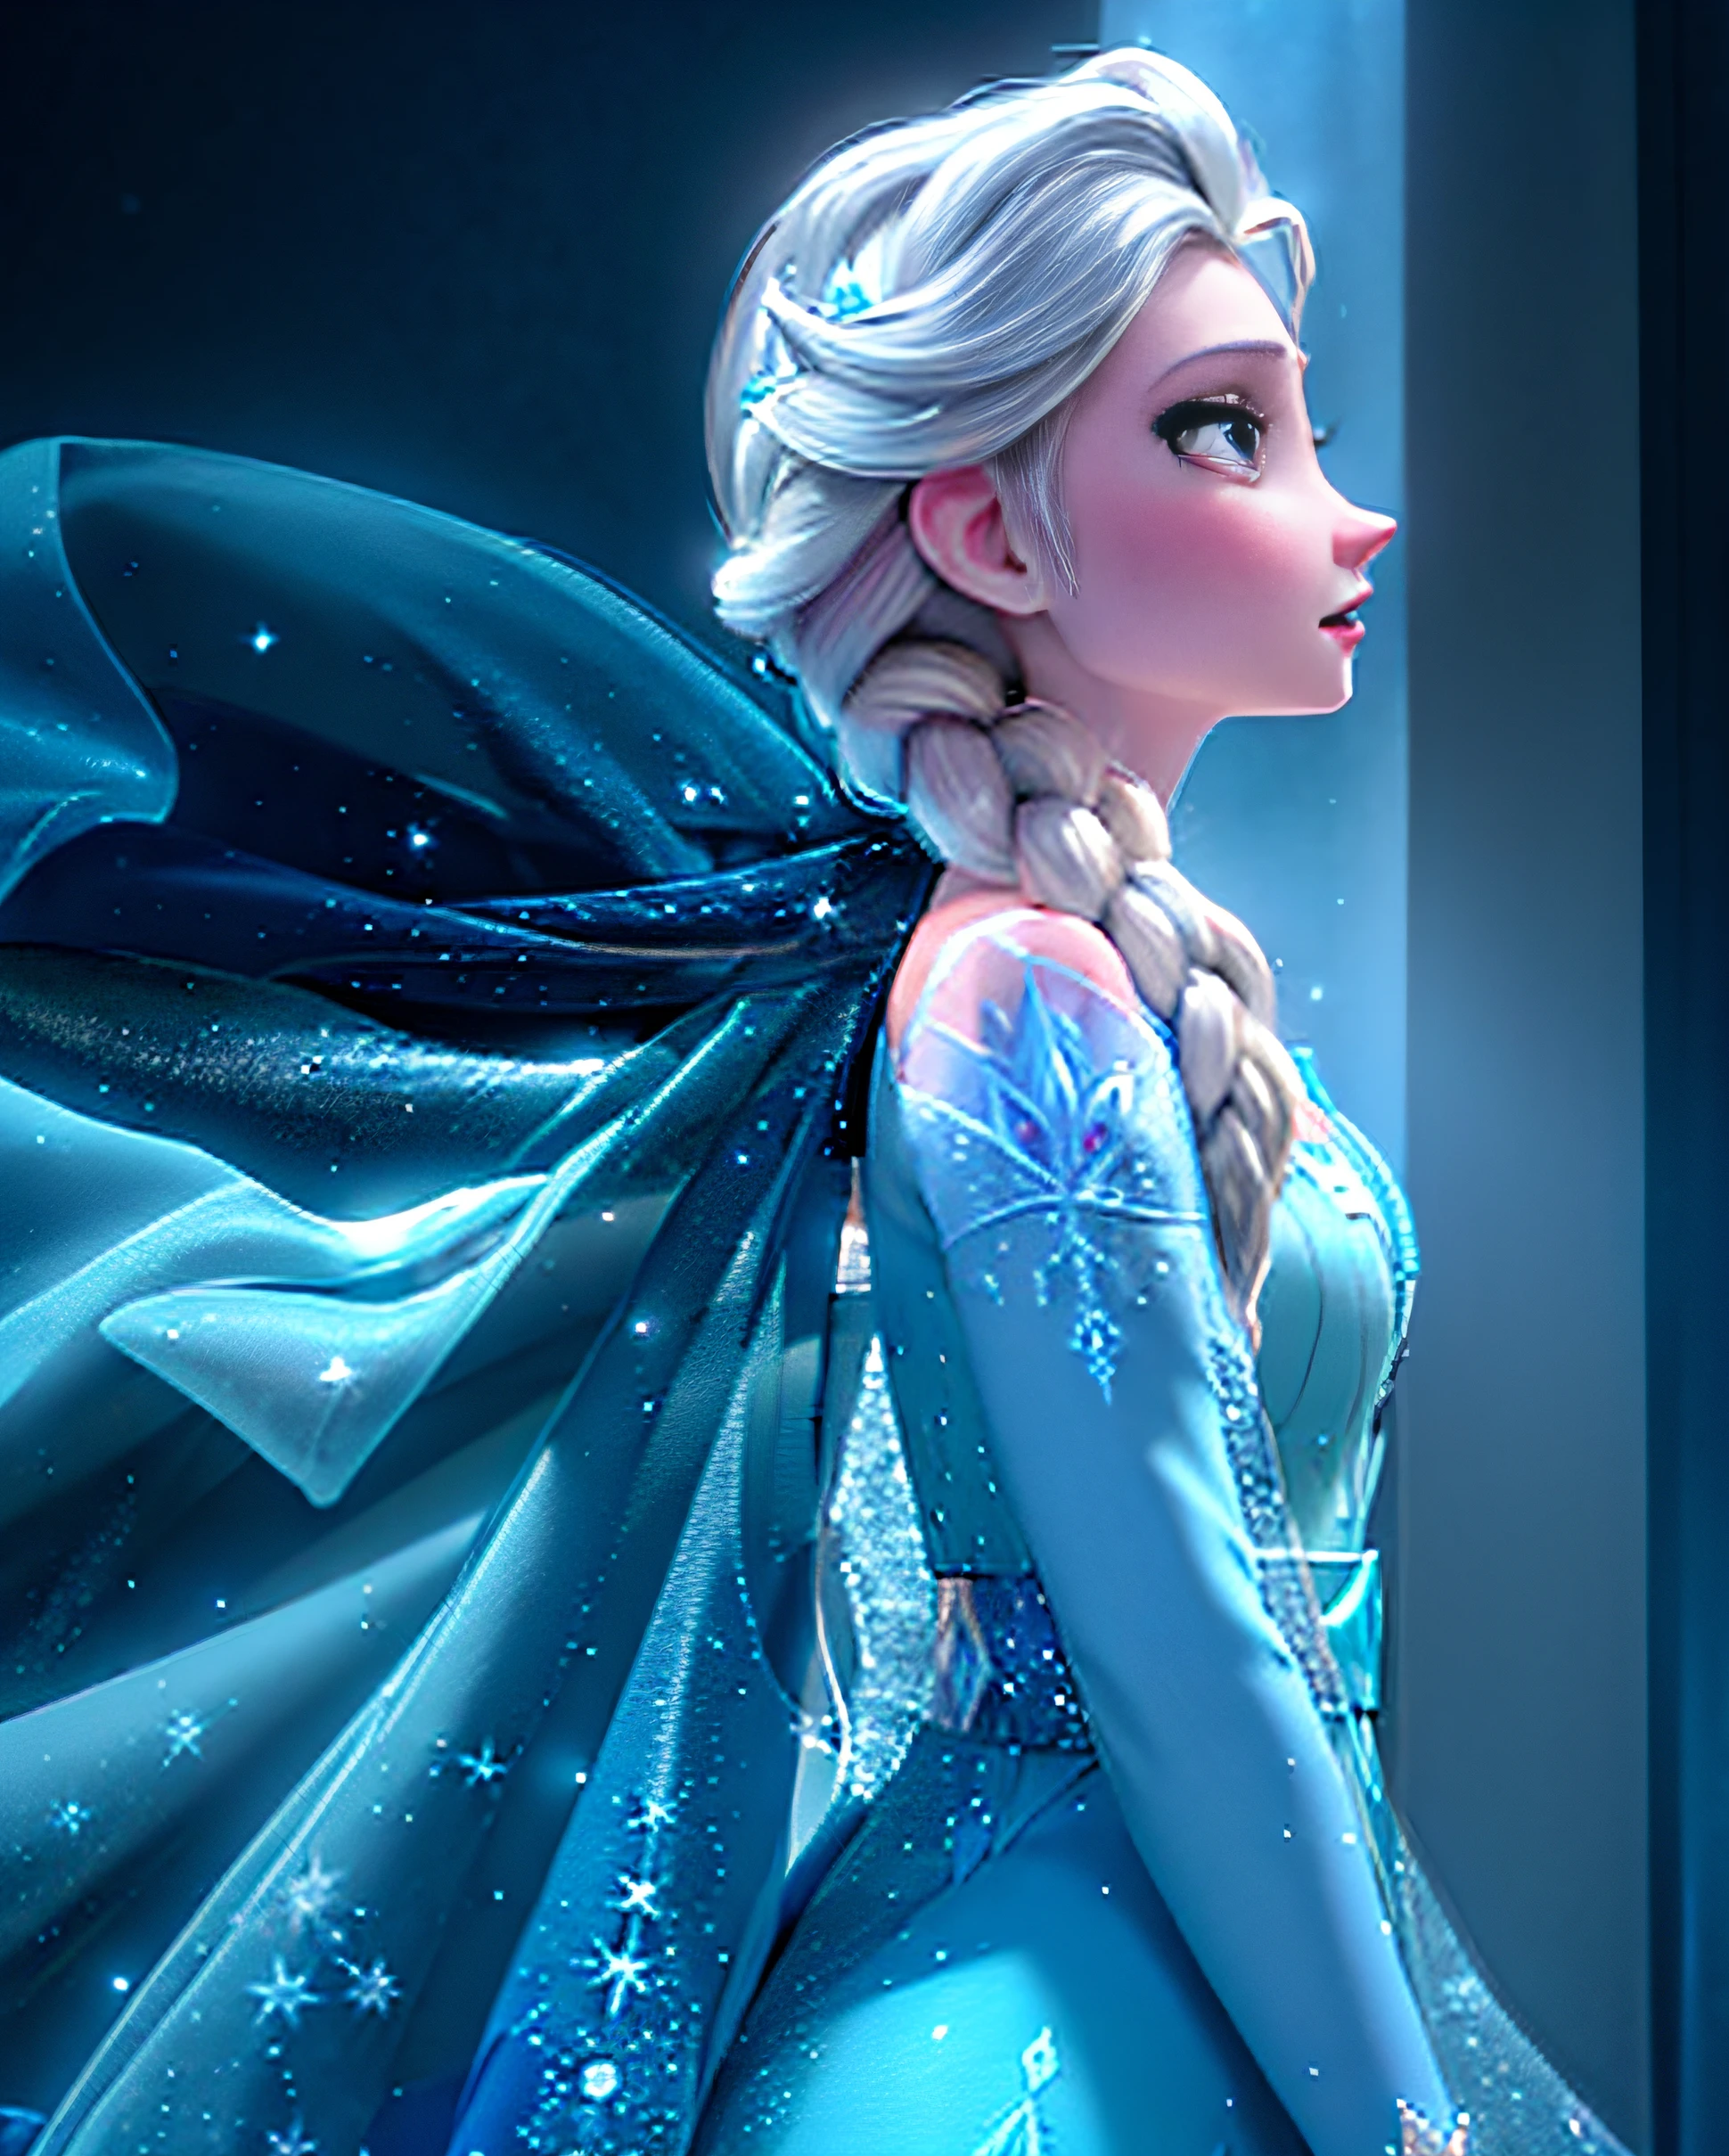 disney's frozen princess 艾尔莎 is wearing a blue dress and a blue cape, beautiful 艾尔莎, 艾尔莎 frozen, 艾尔莎 from frozen, portrait of 艾尔莎 of arendelle, portrait of 艾尔莎 from frozen, 艾尔莎, 冰雪奇缘 II 电影剧照, 冰雪奇缘 2 克劳斯电影, 像雕像一样僵硬, 迪士尼动画风格, 8千)), 像冰一样冷! 🧊